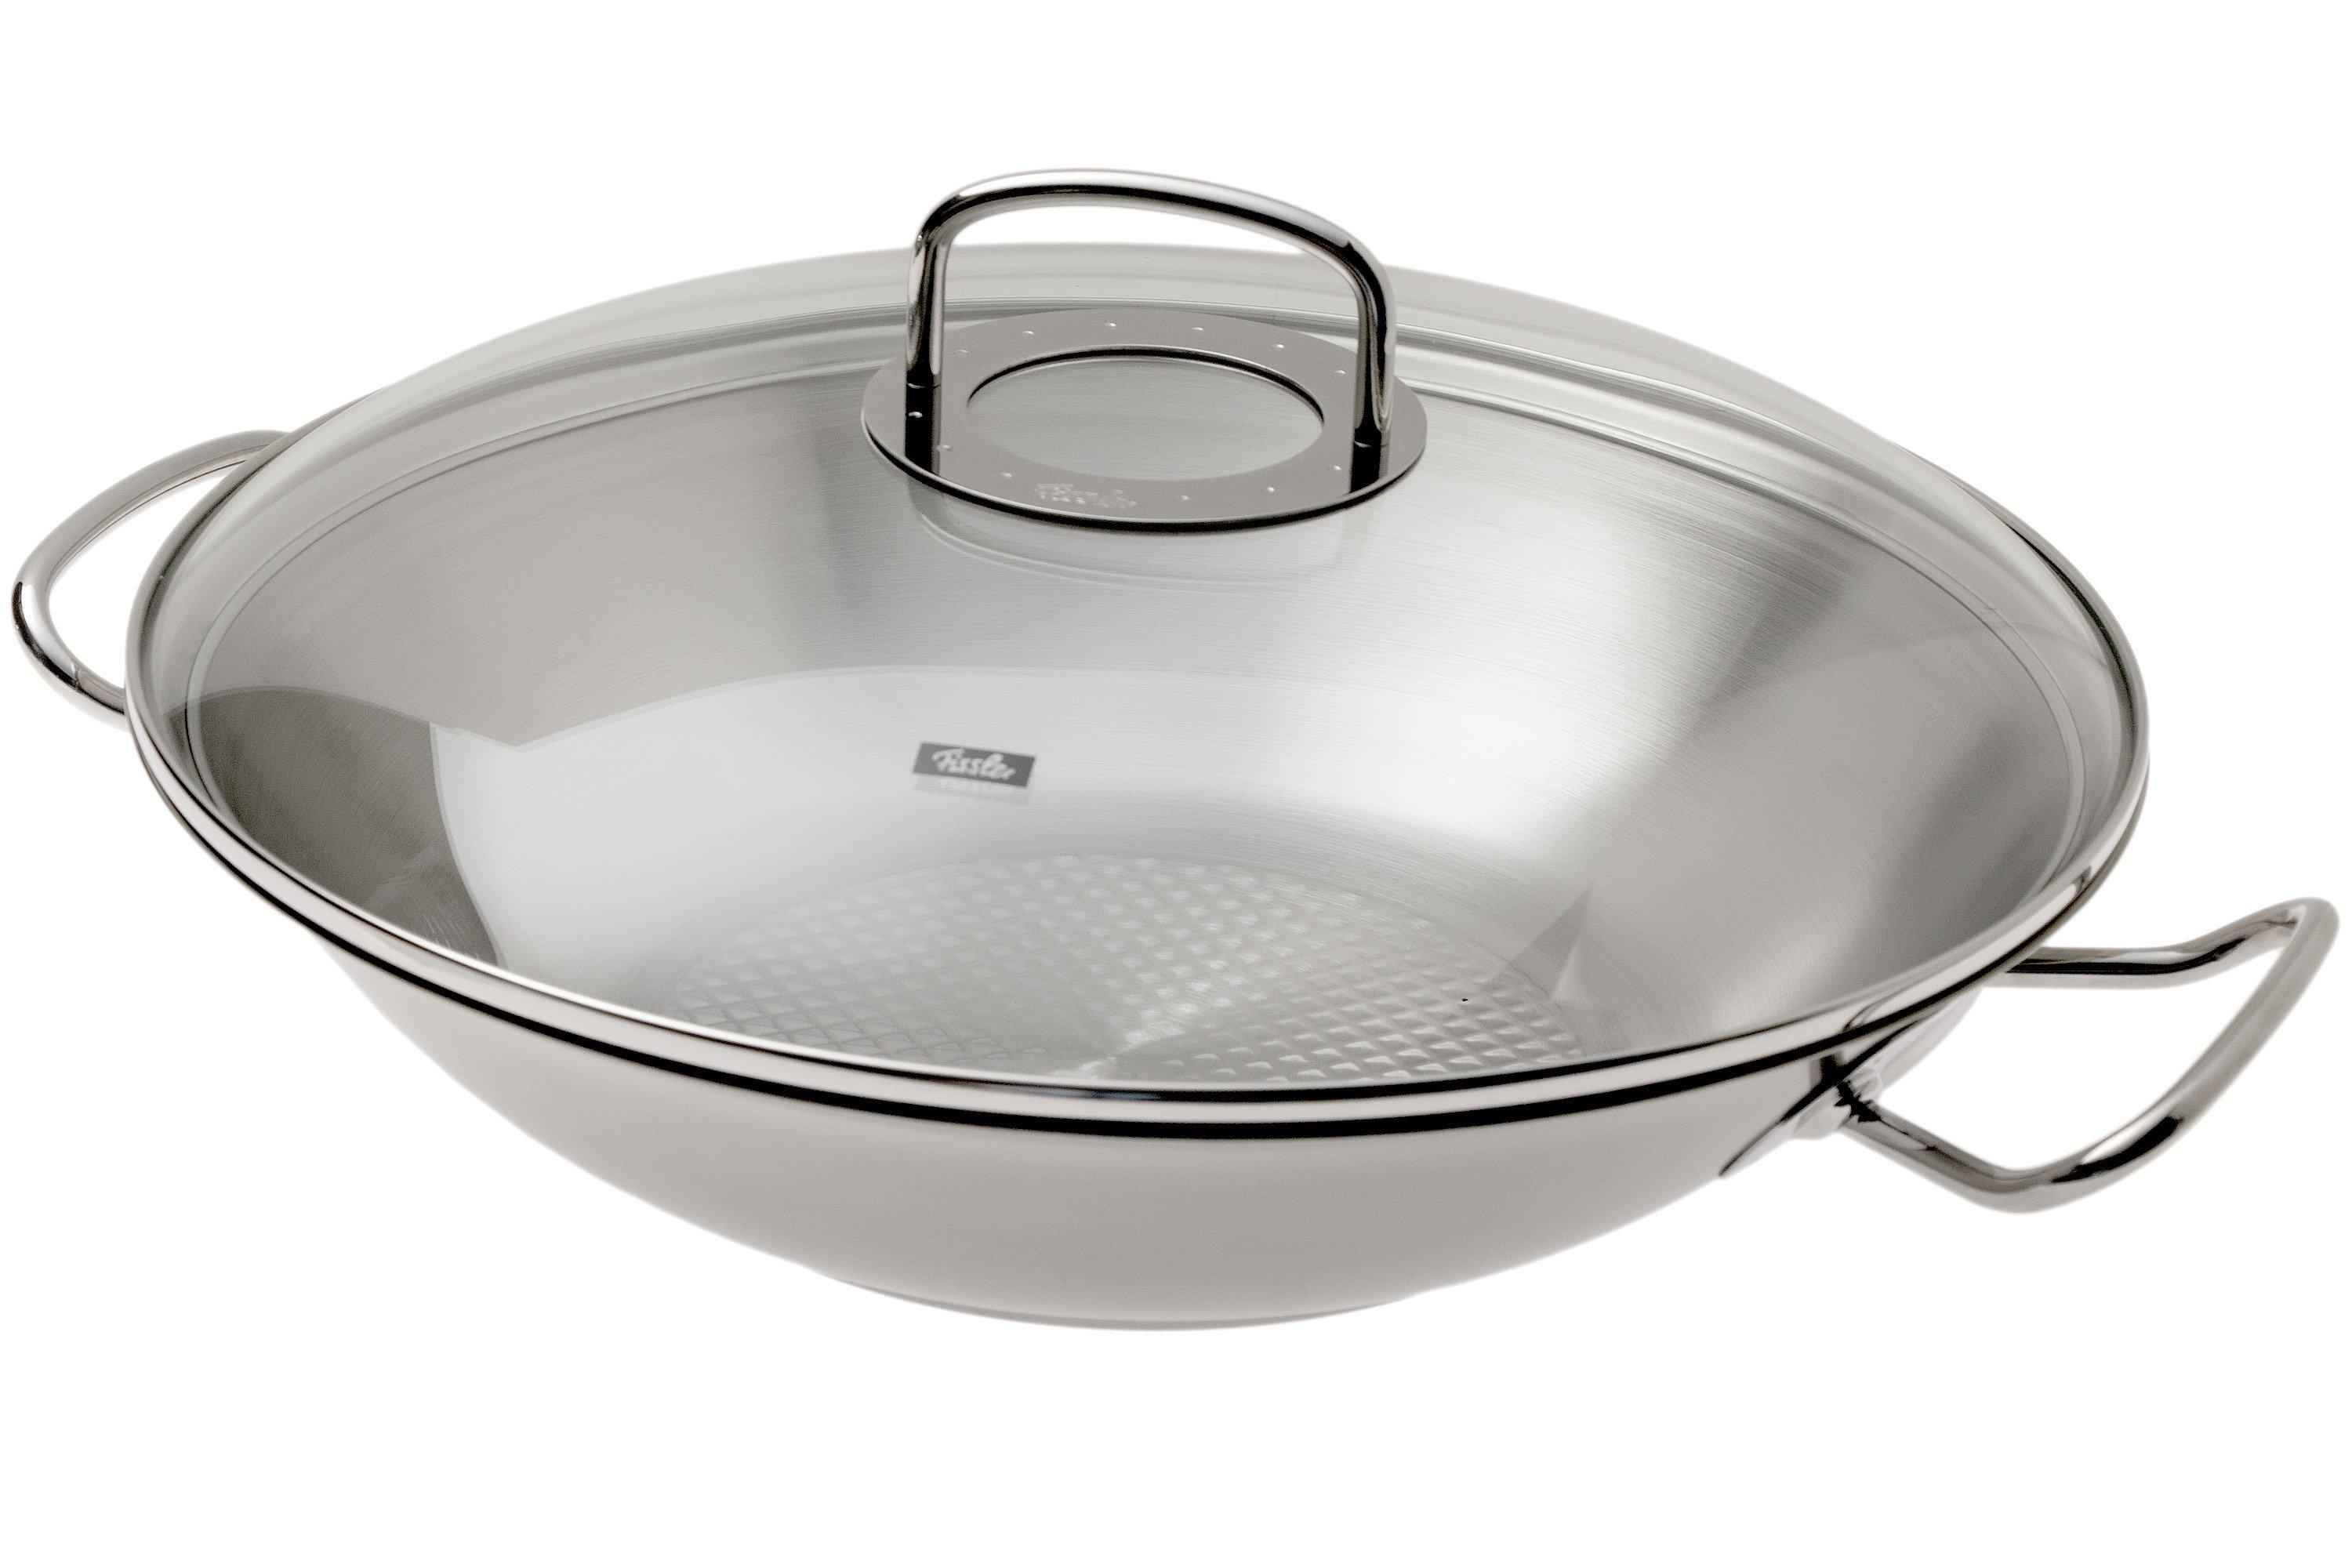 Fissler Original Profi 084-826-35-000 wok with lid, | Advantageously shopping at Knivesandtools.com